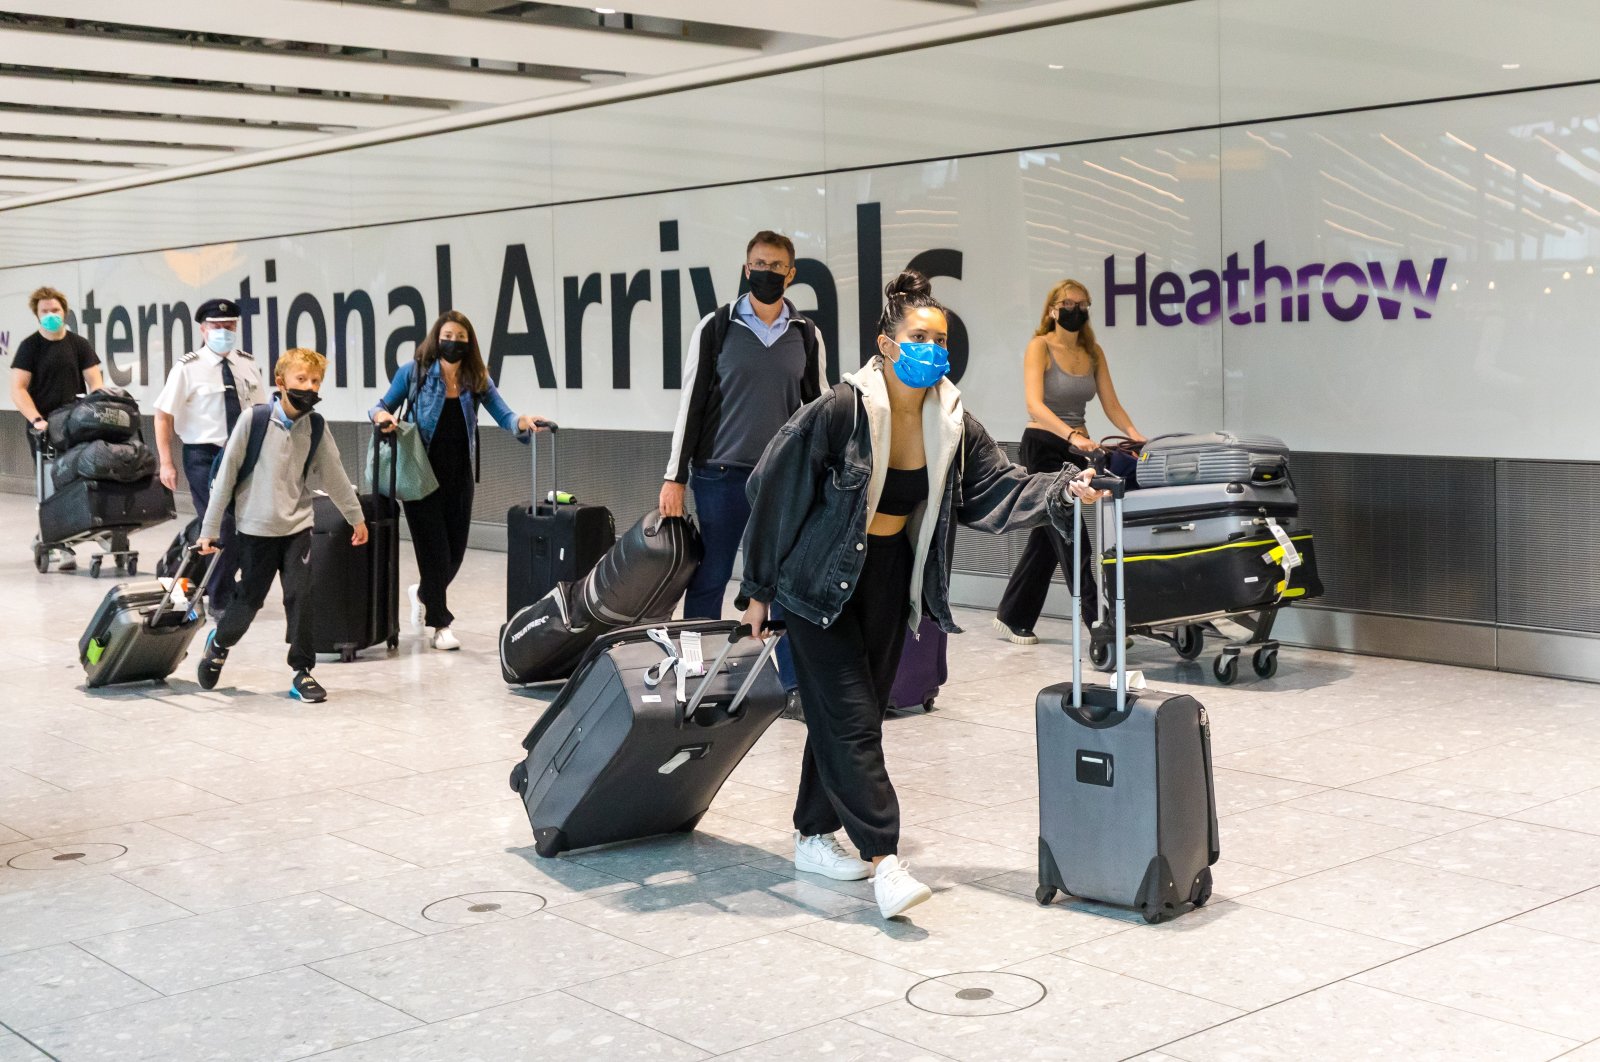 Passengers arrive at Heathrow Airport in London, U.K., Aug. 2, 2021. (EPA Photo)